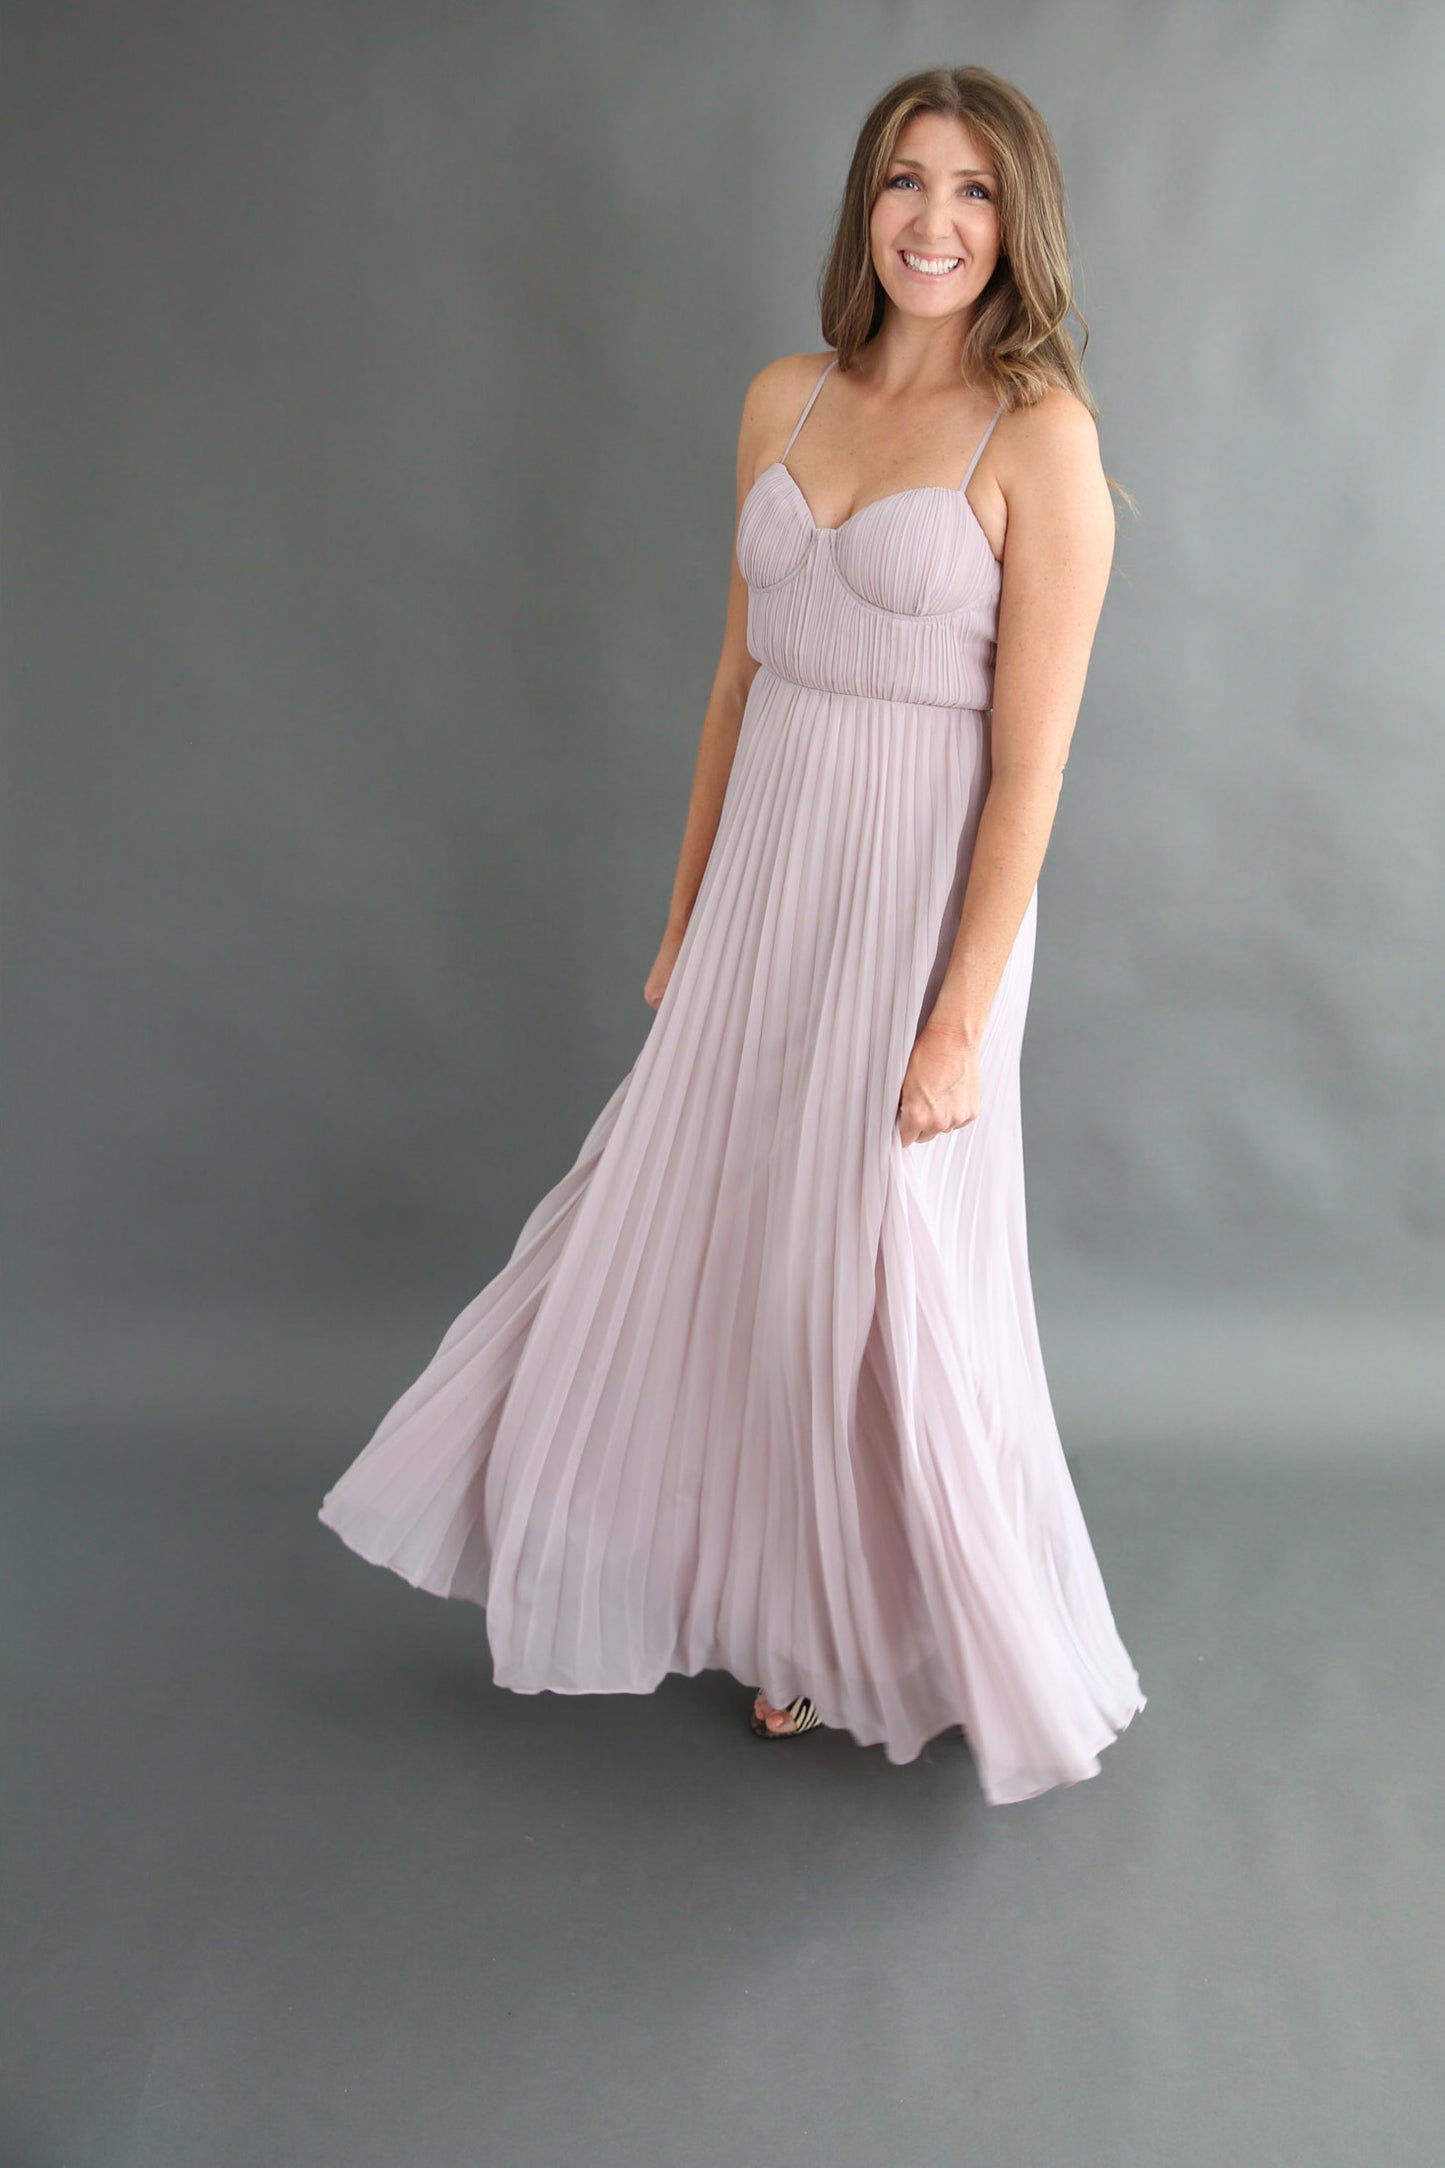 Lavender Fields Bustier Dress Rental - Size Medium